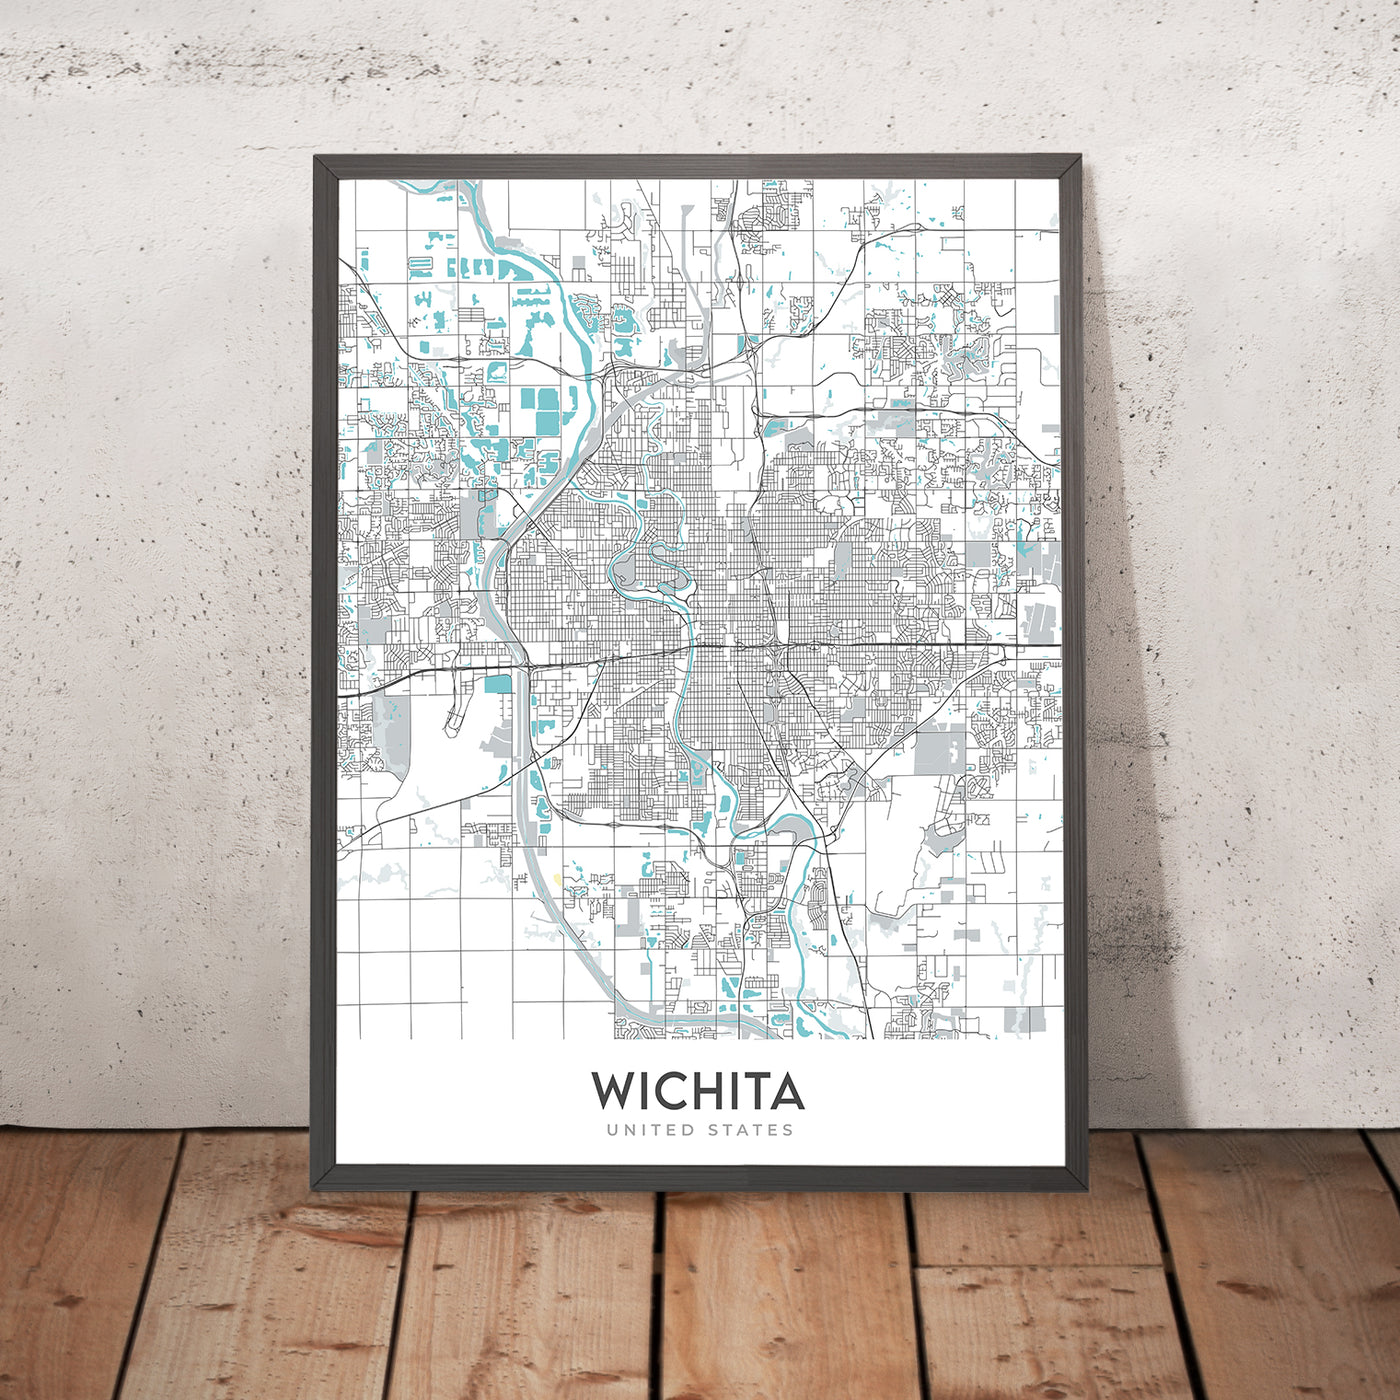 Mapa moderno de la ciudad de Wichita, KS: College Hill, Delano, Centro, Keeper of the Plains, Universidad Estatal de Wichita